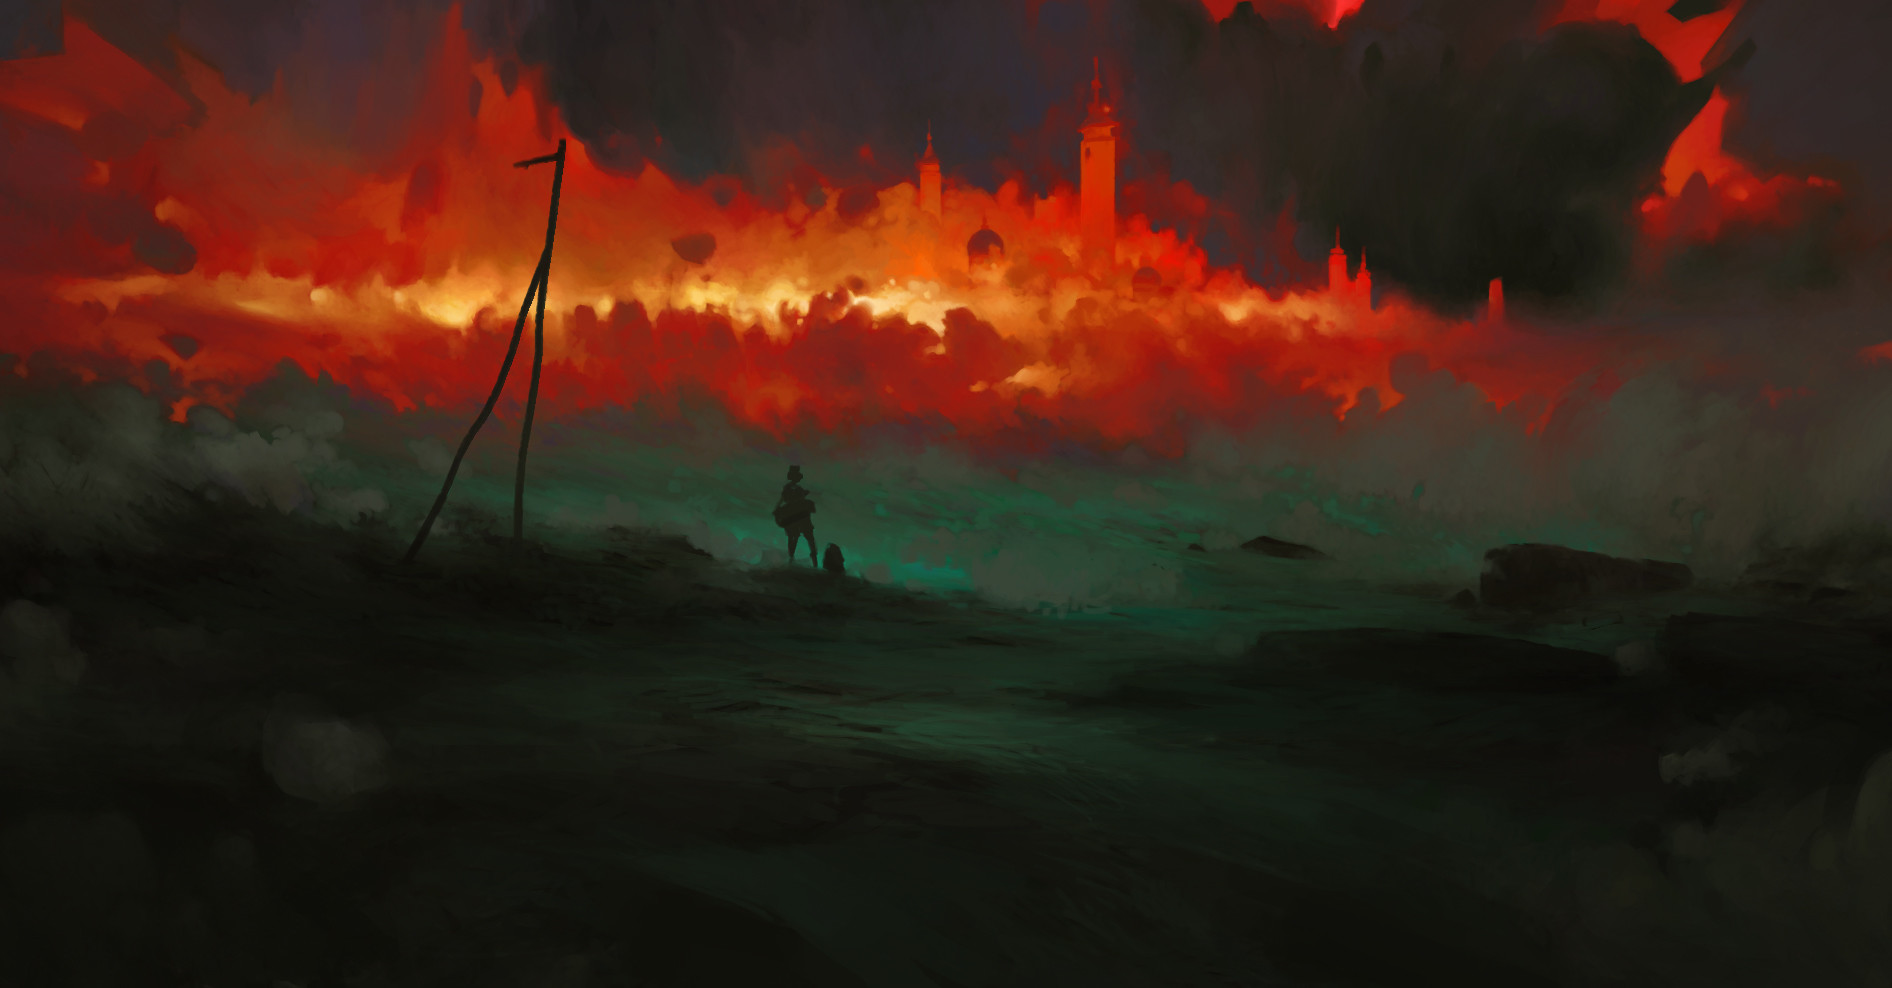 General 1892x988 digital art artwork landscape fire field clouds burning dark fantasy city